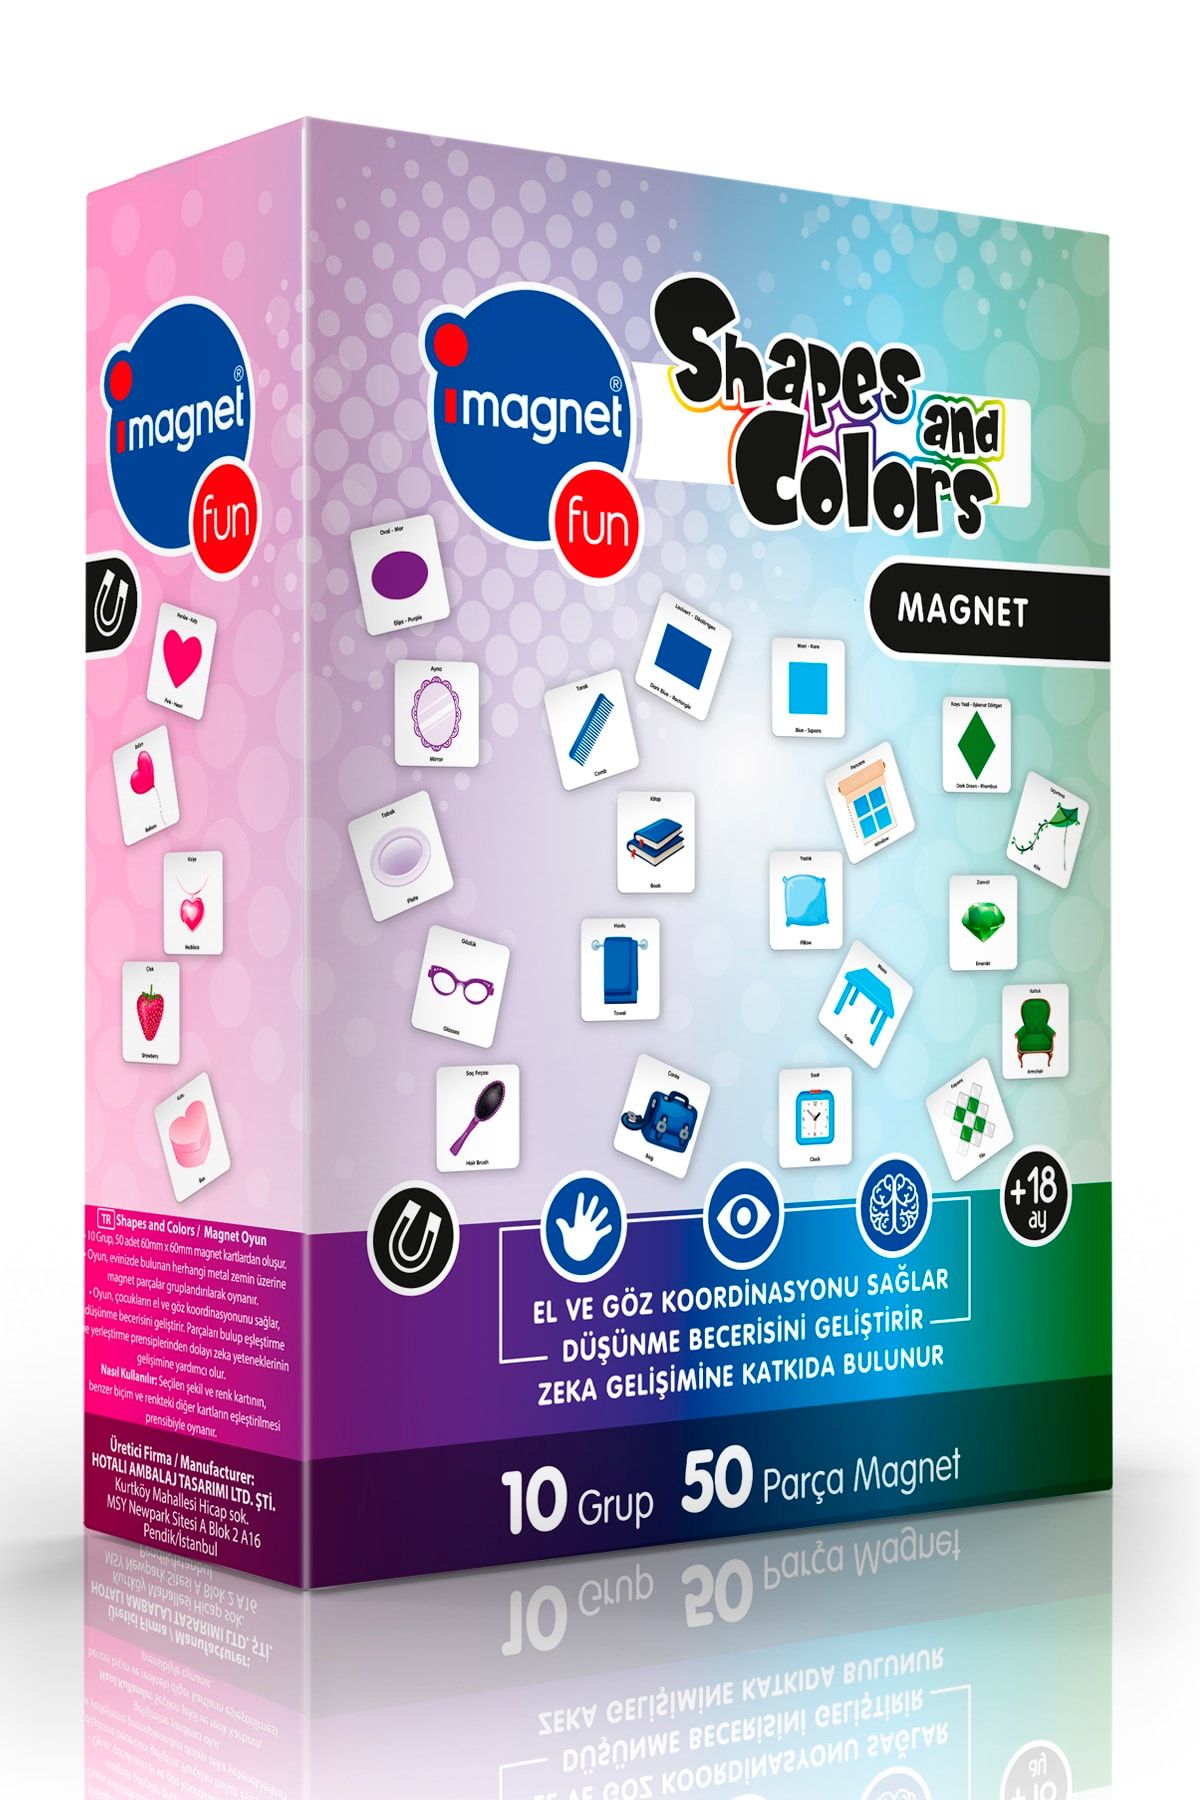 imagnetfun Shapes And Colors | Magnet Şekil, Renkleri Gruplandırma | 10 Grup | 50 Parça